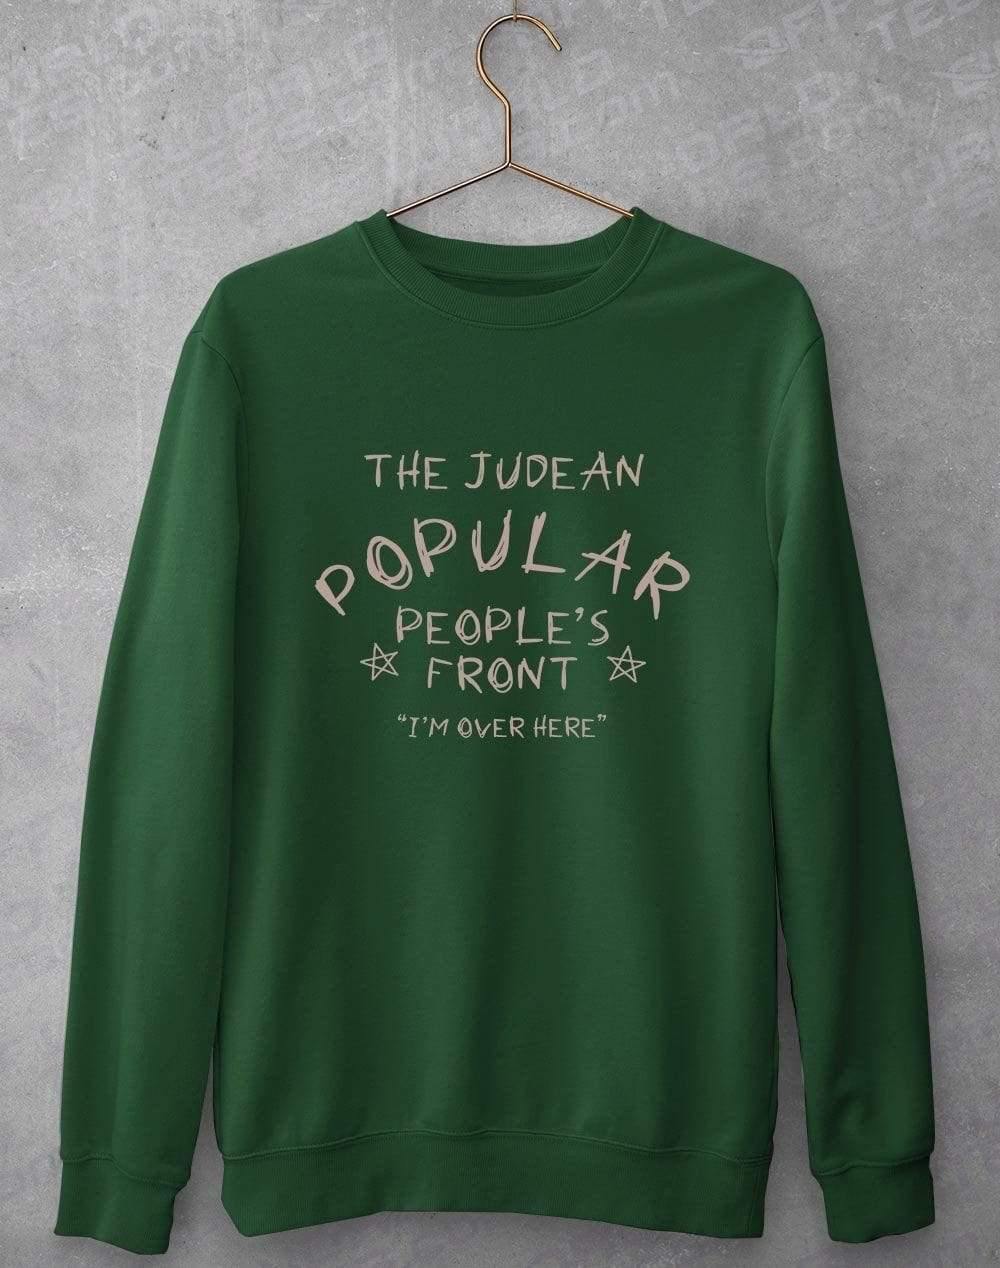 Judean Pupular Peoples Front Sweatshirt S / Bottle  - Off World Tees